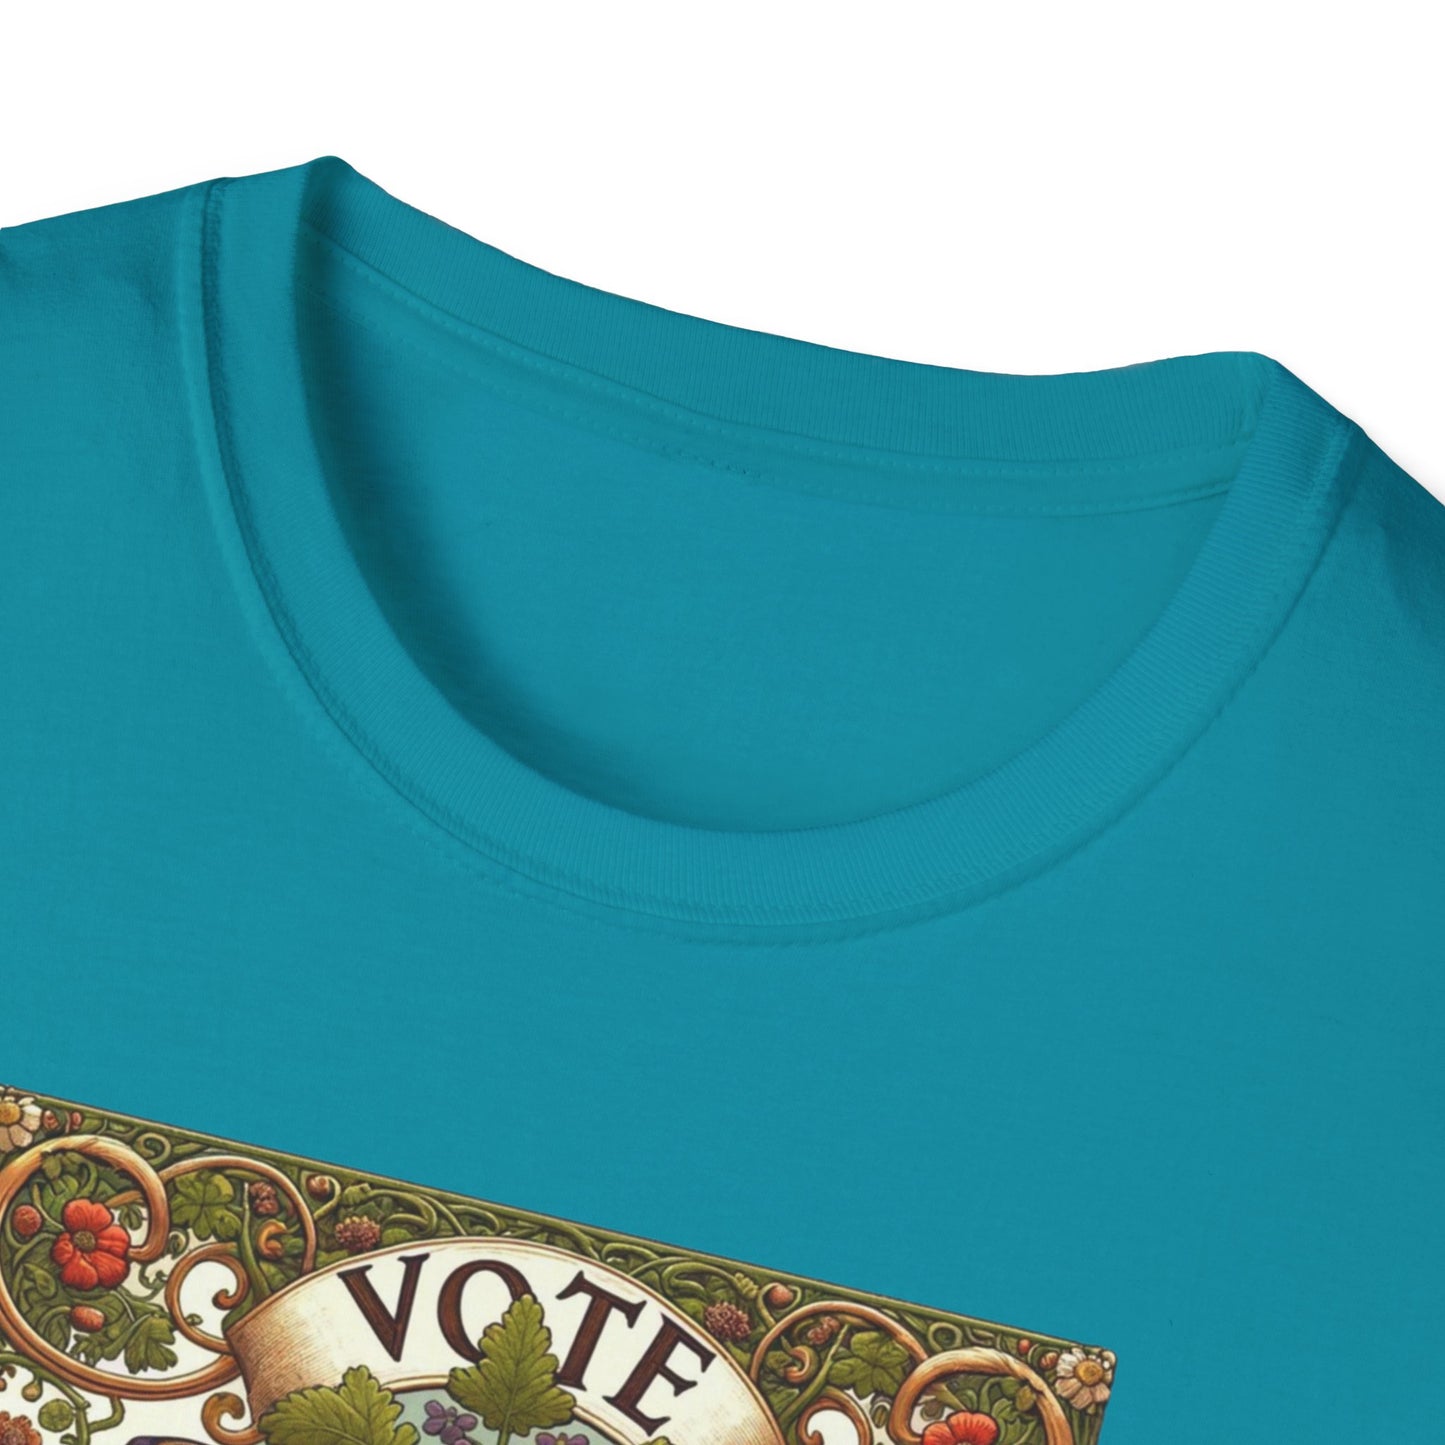 Inspirational Statement T-Shirt: Vote Nature! William Morris Inspired